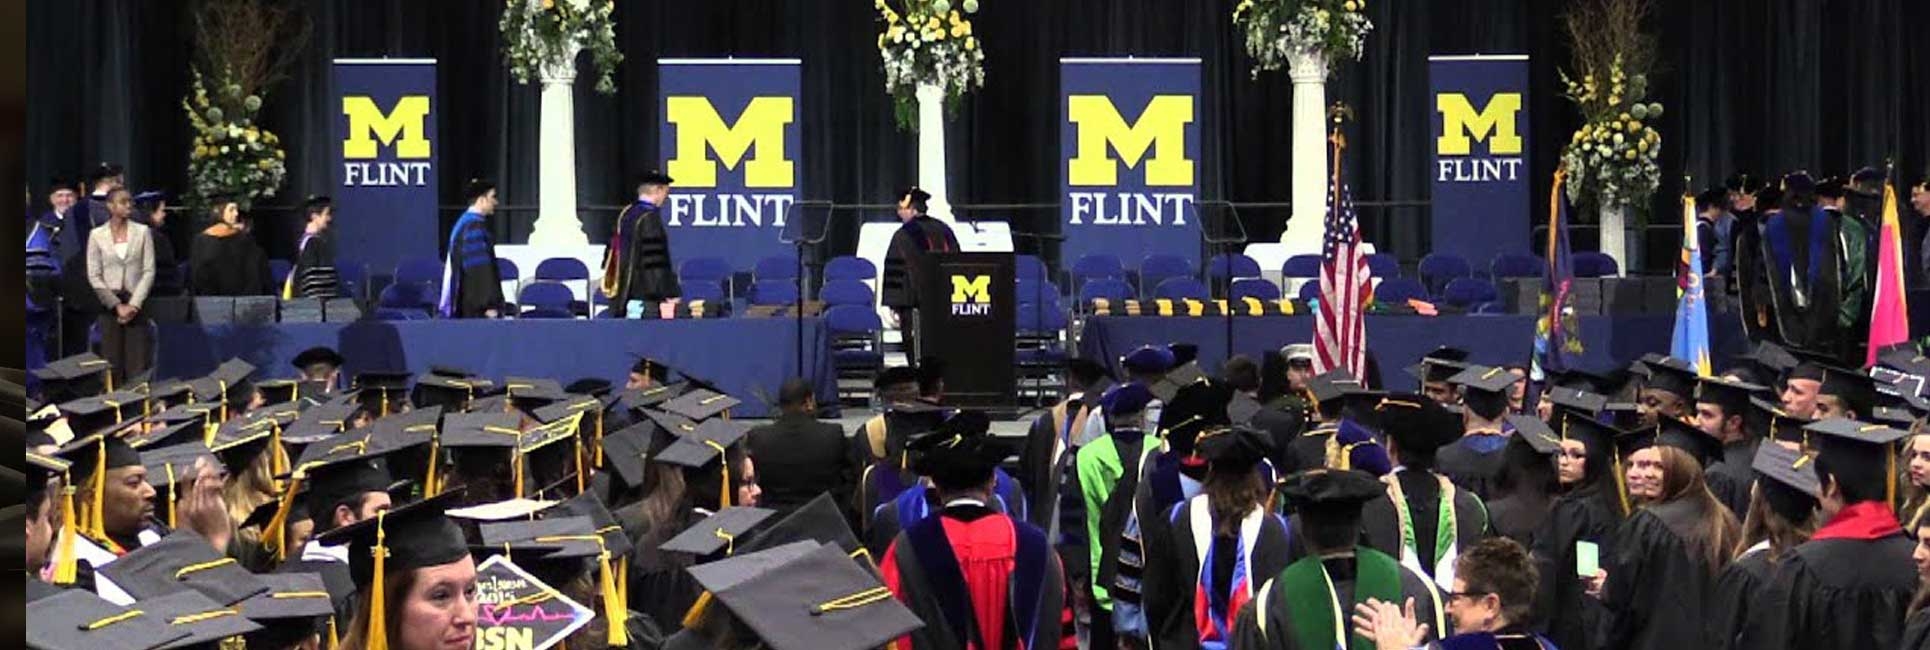 University of Michigan Flint Graduation